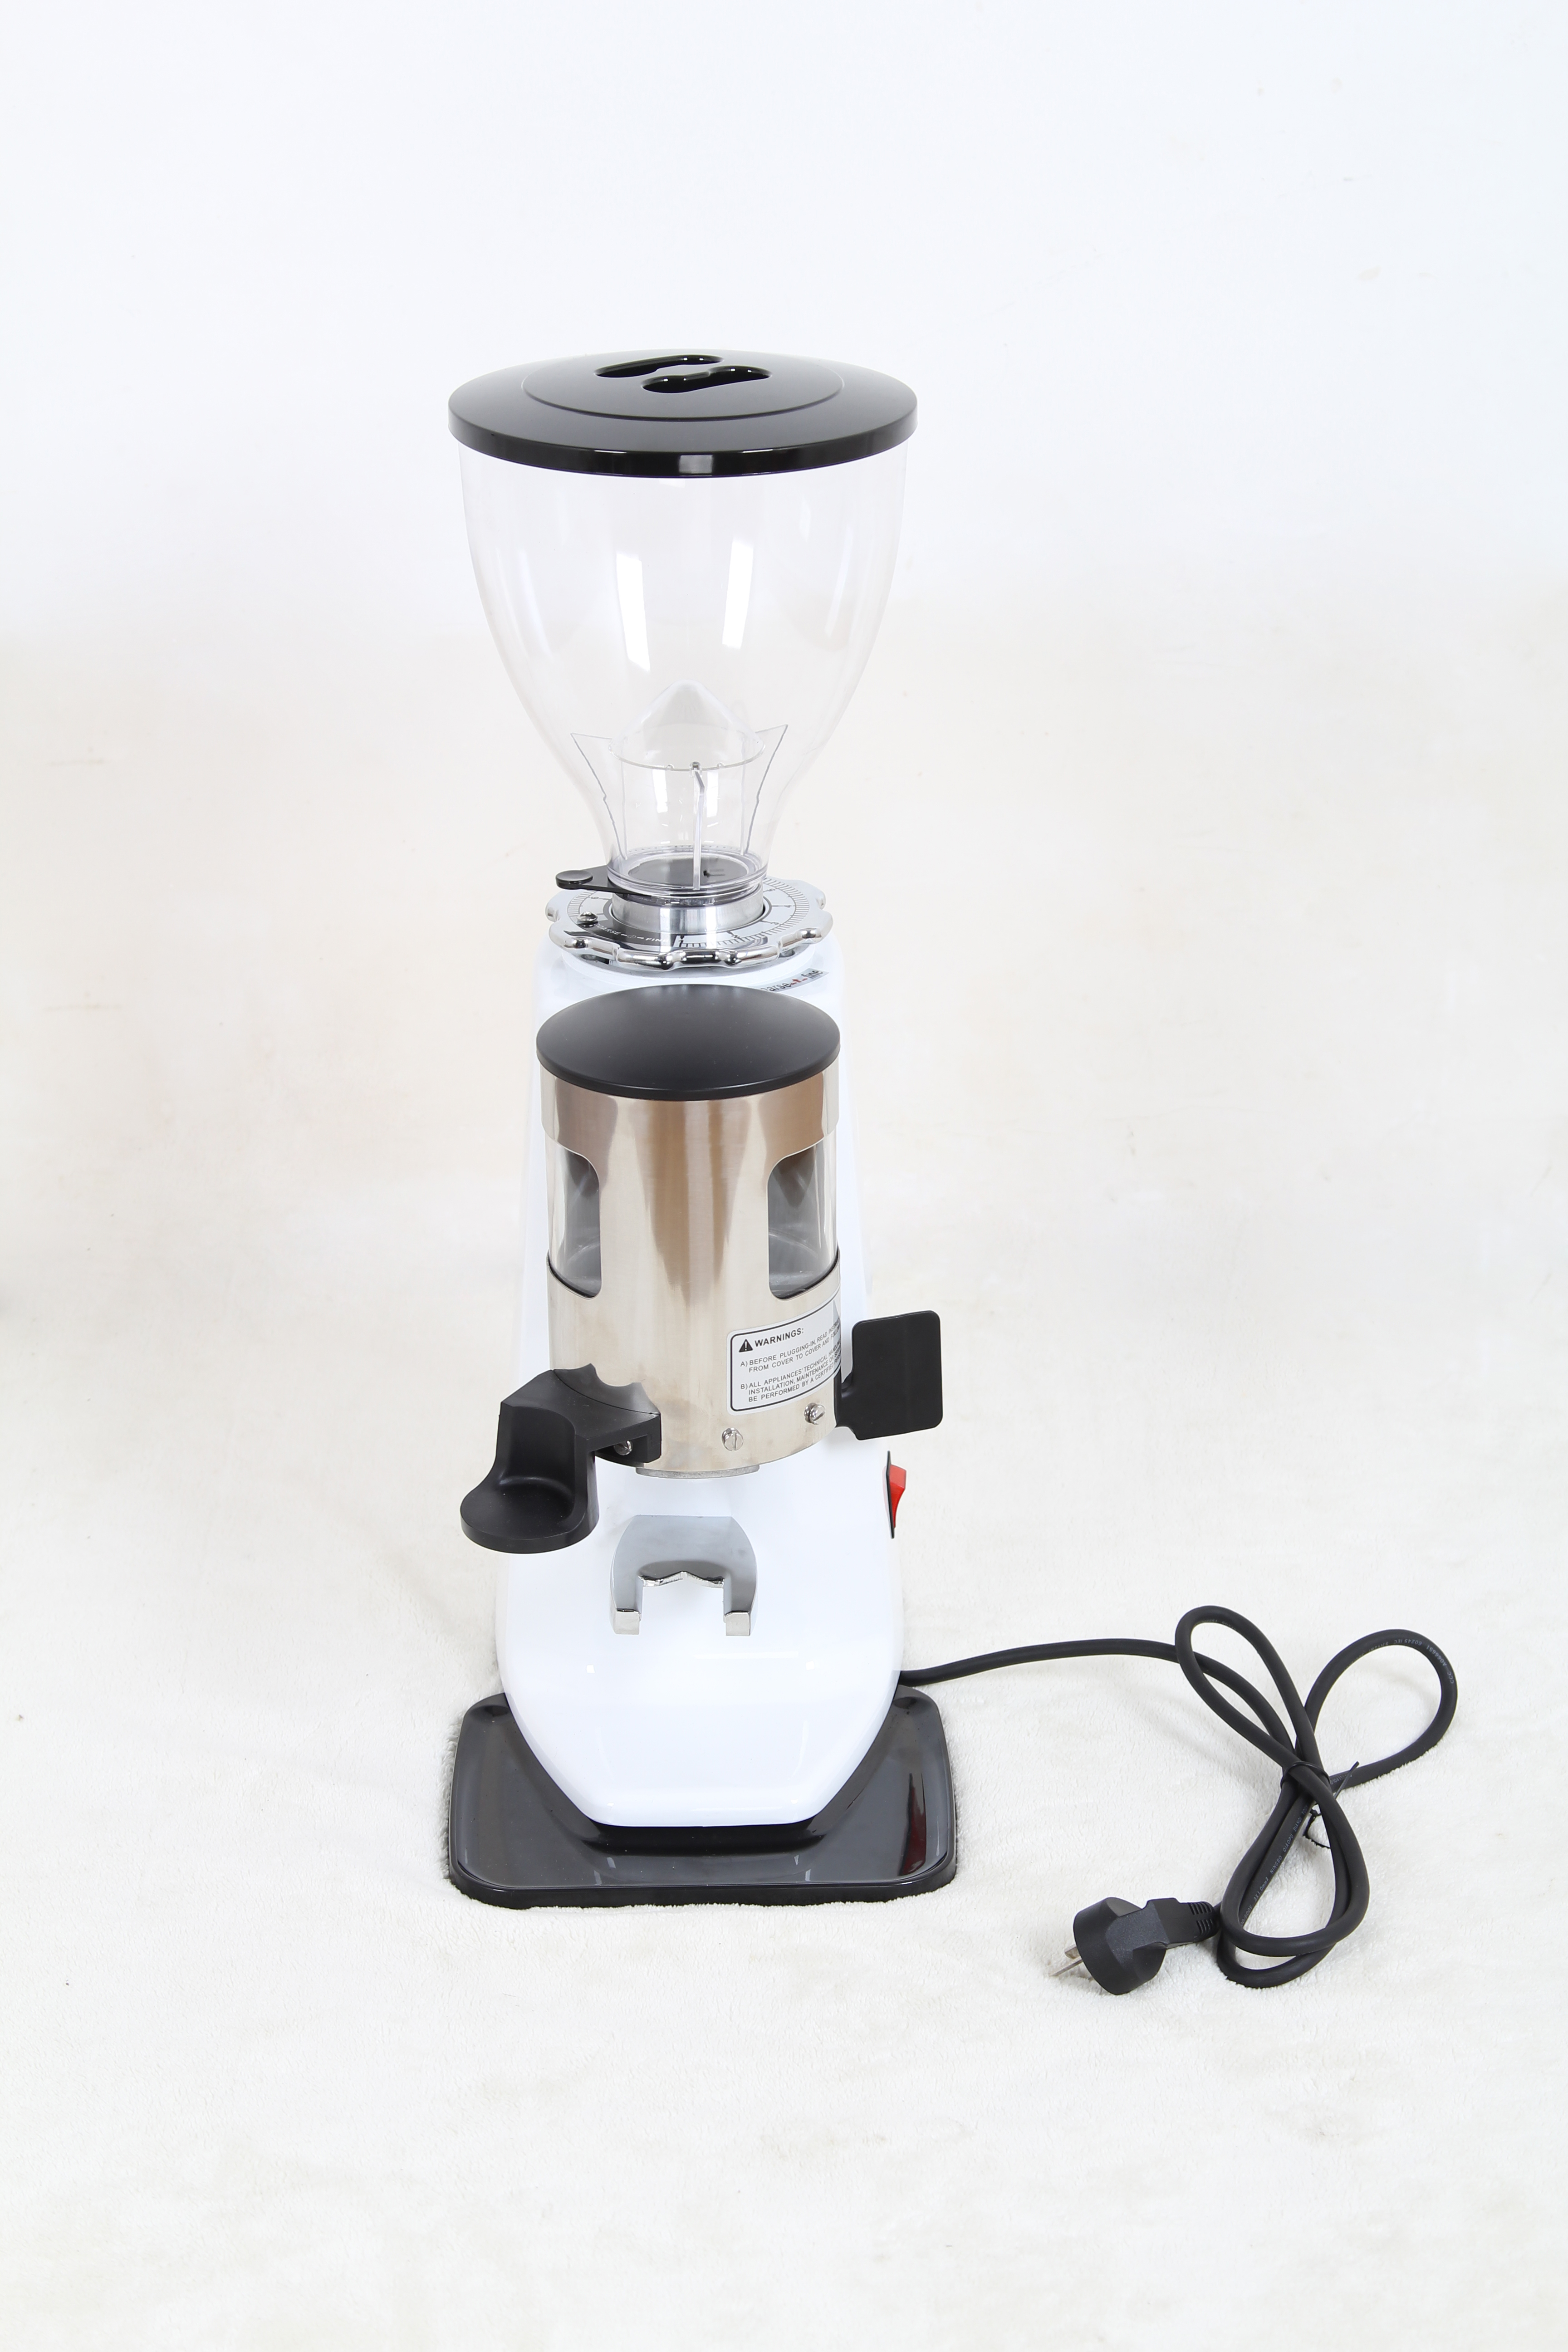 64mm mills Dispenser grinder white color with round hopper - 副本